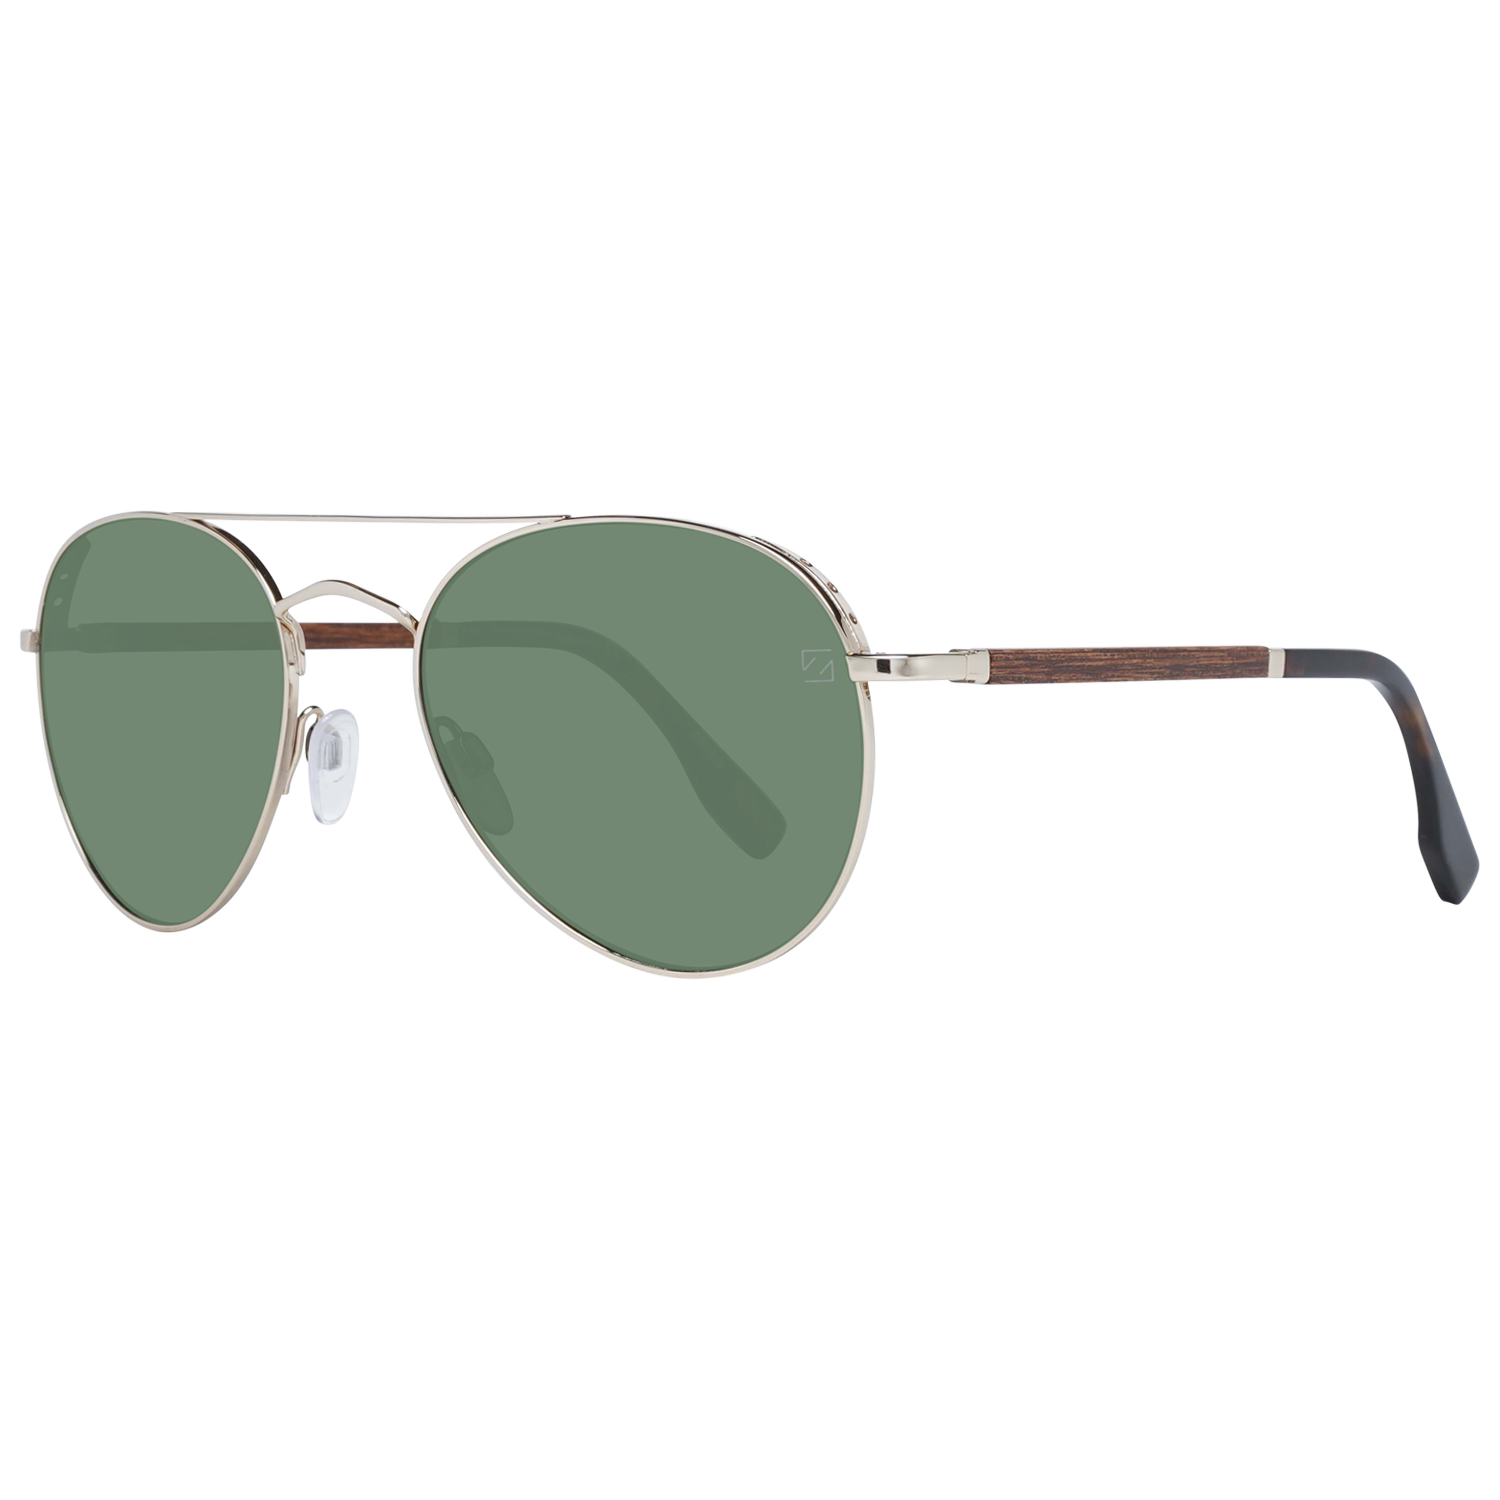 Zegna Couture Sunglasses Zegna Couture Sunglasses ZC0002 56 28N Titanium Eyeglasses Eyewear UK USA Australia 